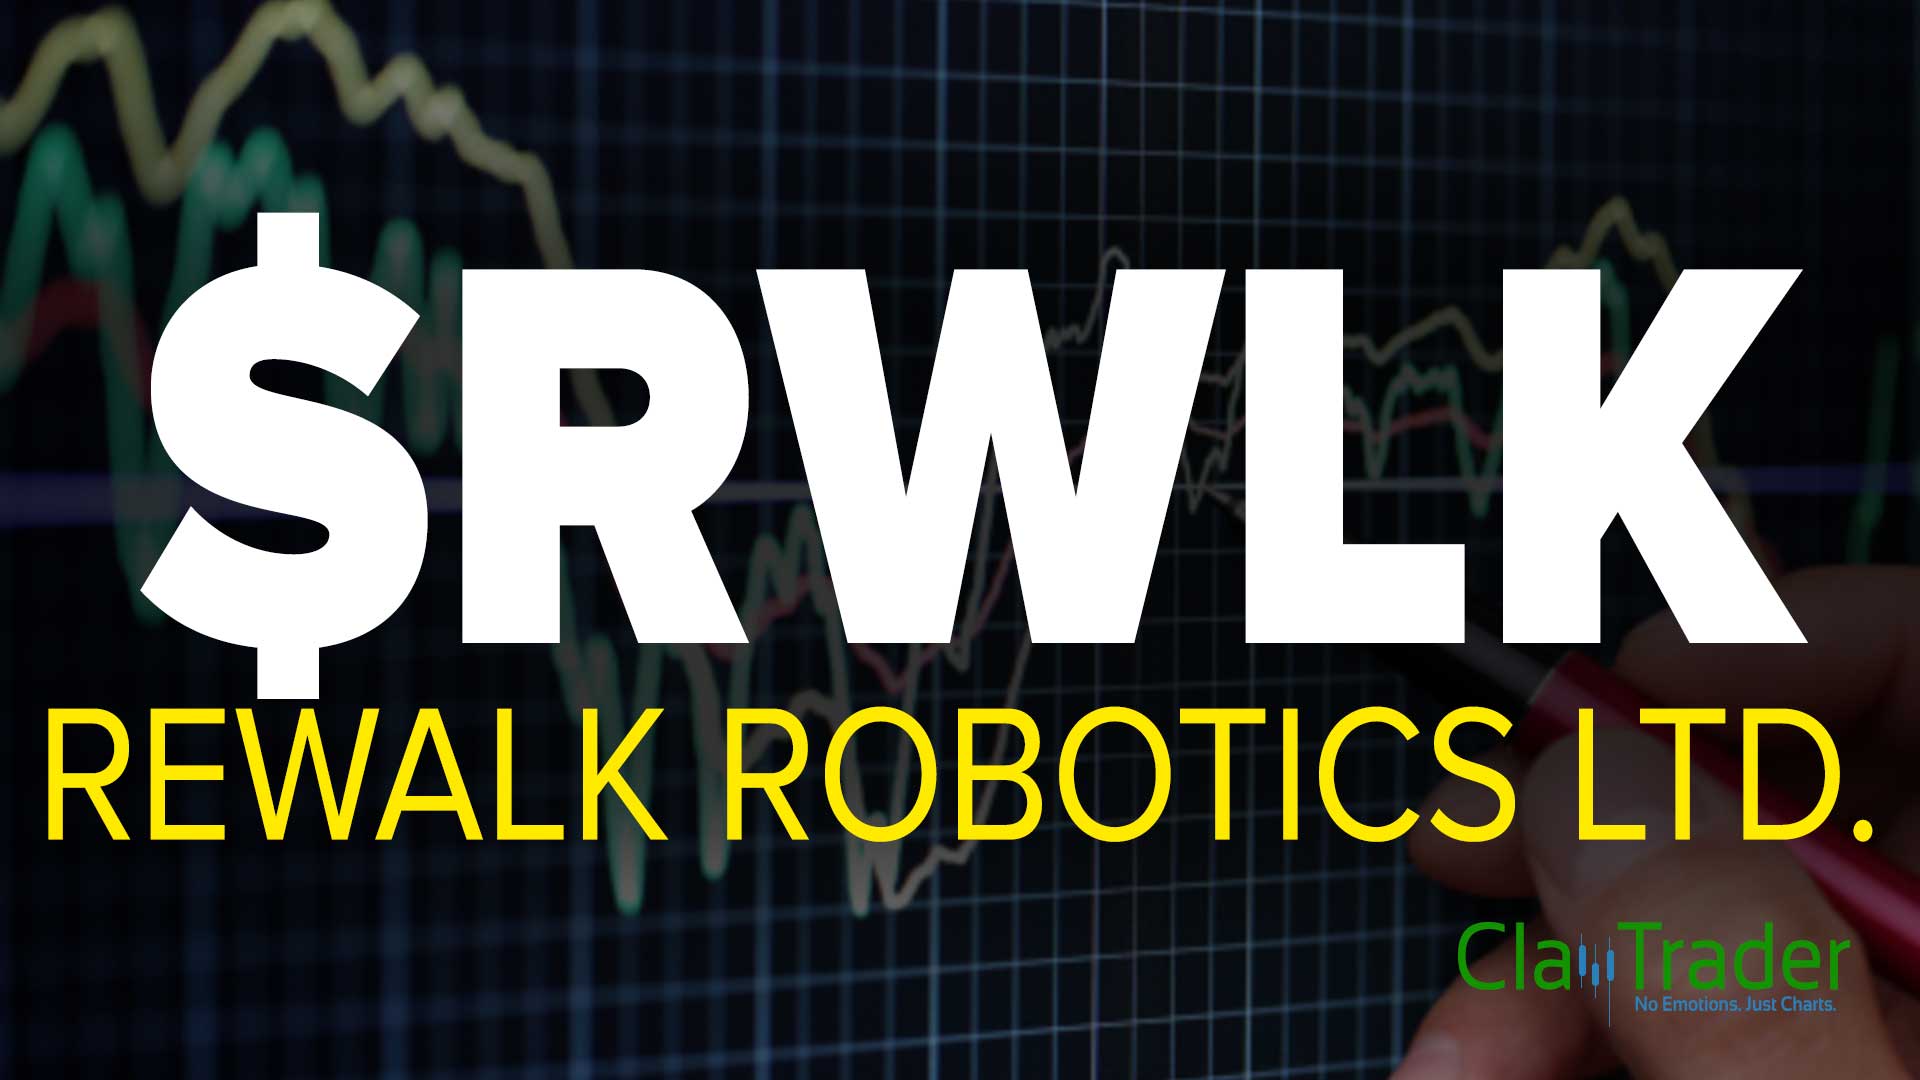 REWALK ROBOTICS LTD. (RWLK) Stock Chart Technical Analysis